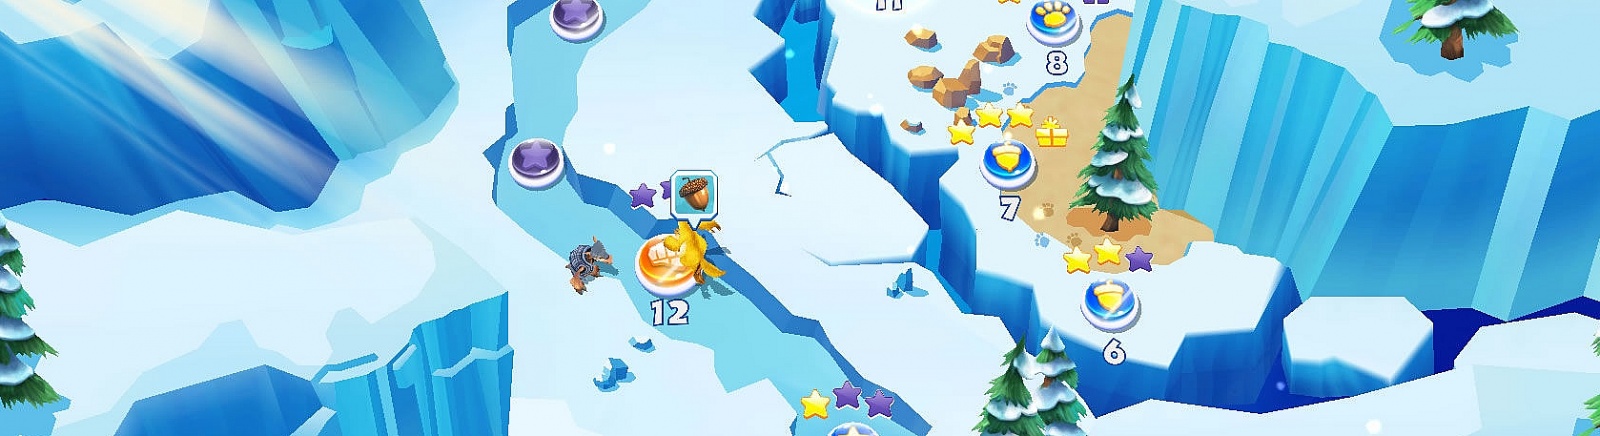 Дата выхода Ice Age Avalanche (Ледниковый Период: Лавина)  на PC, iOS и Android в России и во всем мире